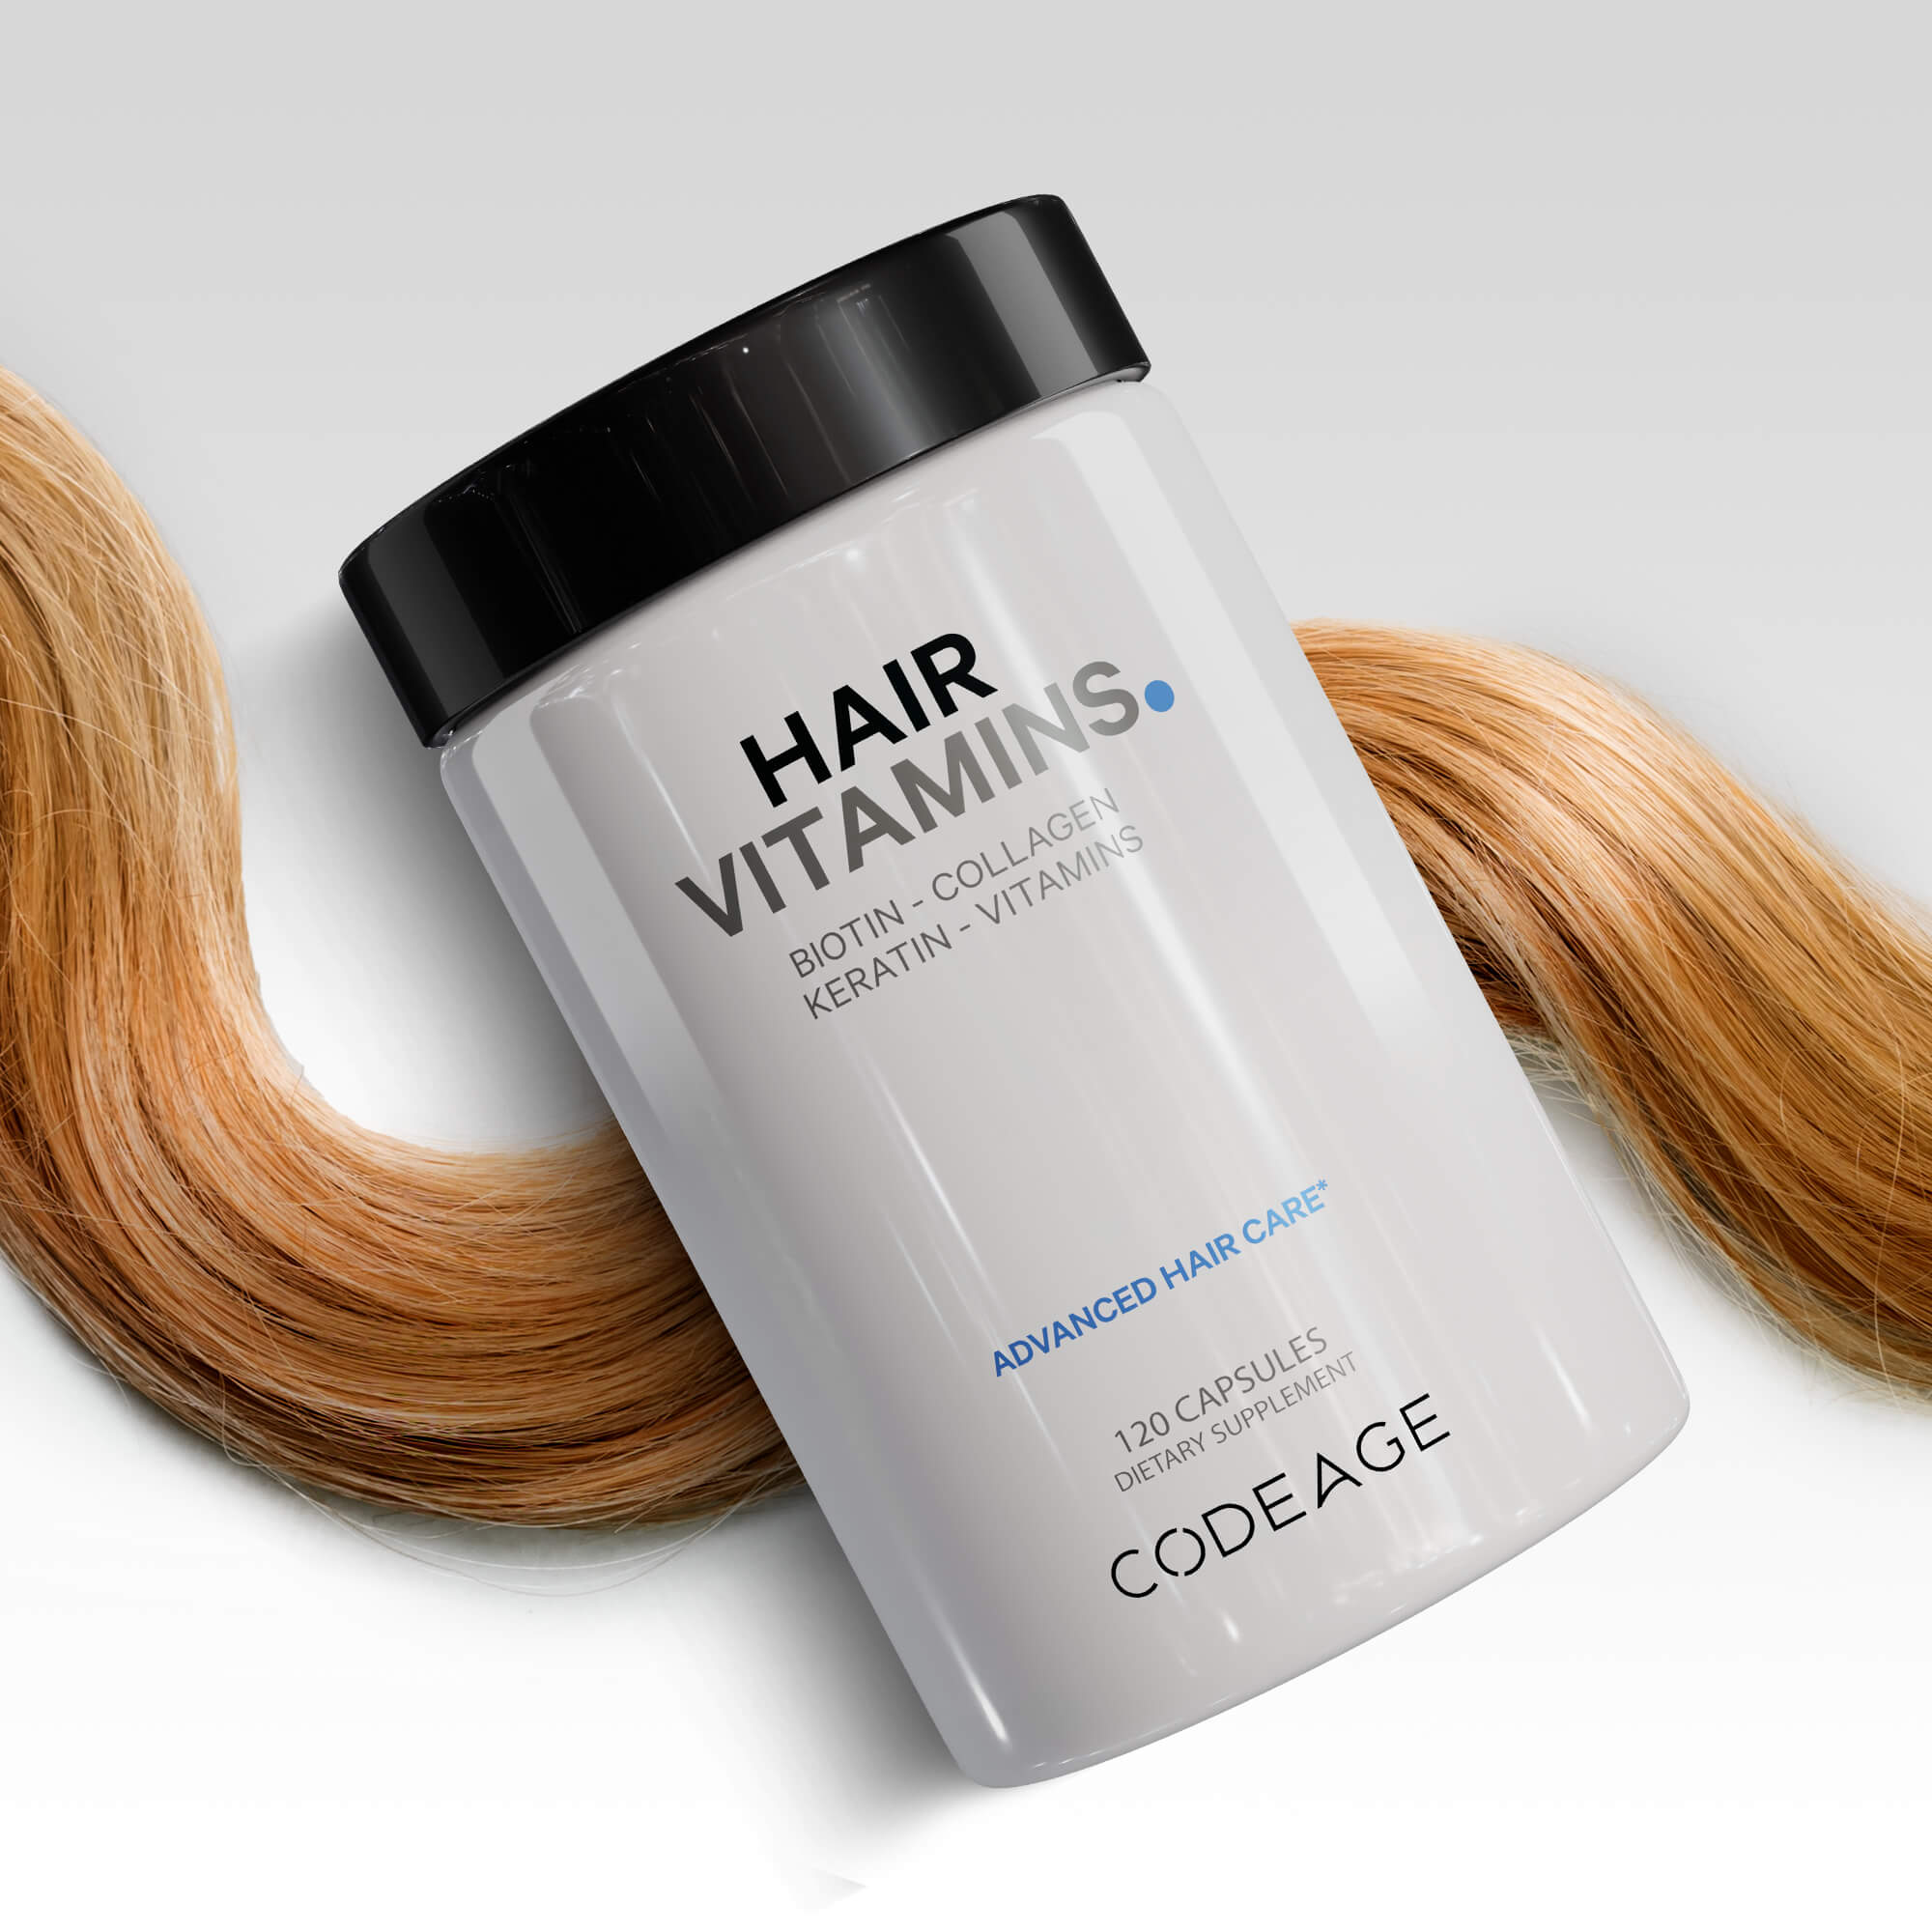 Codeage Hair Vitamins, Biotin, Keratin, Collagen Omega-3 Supplement